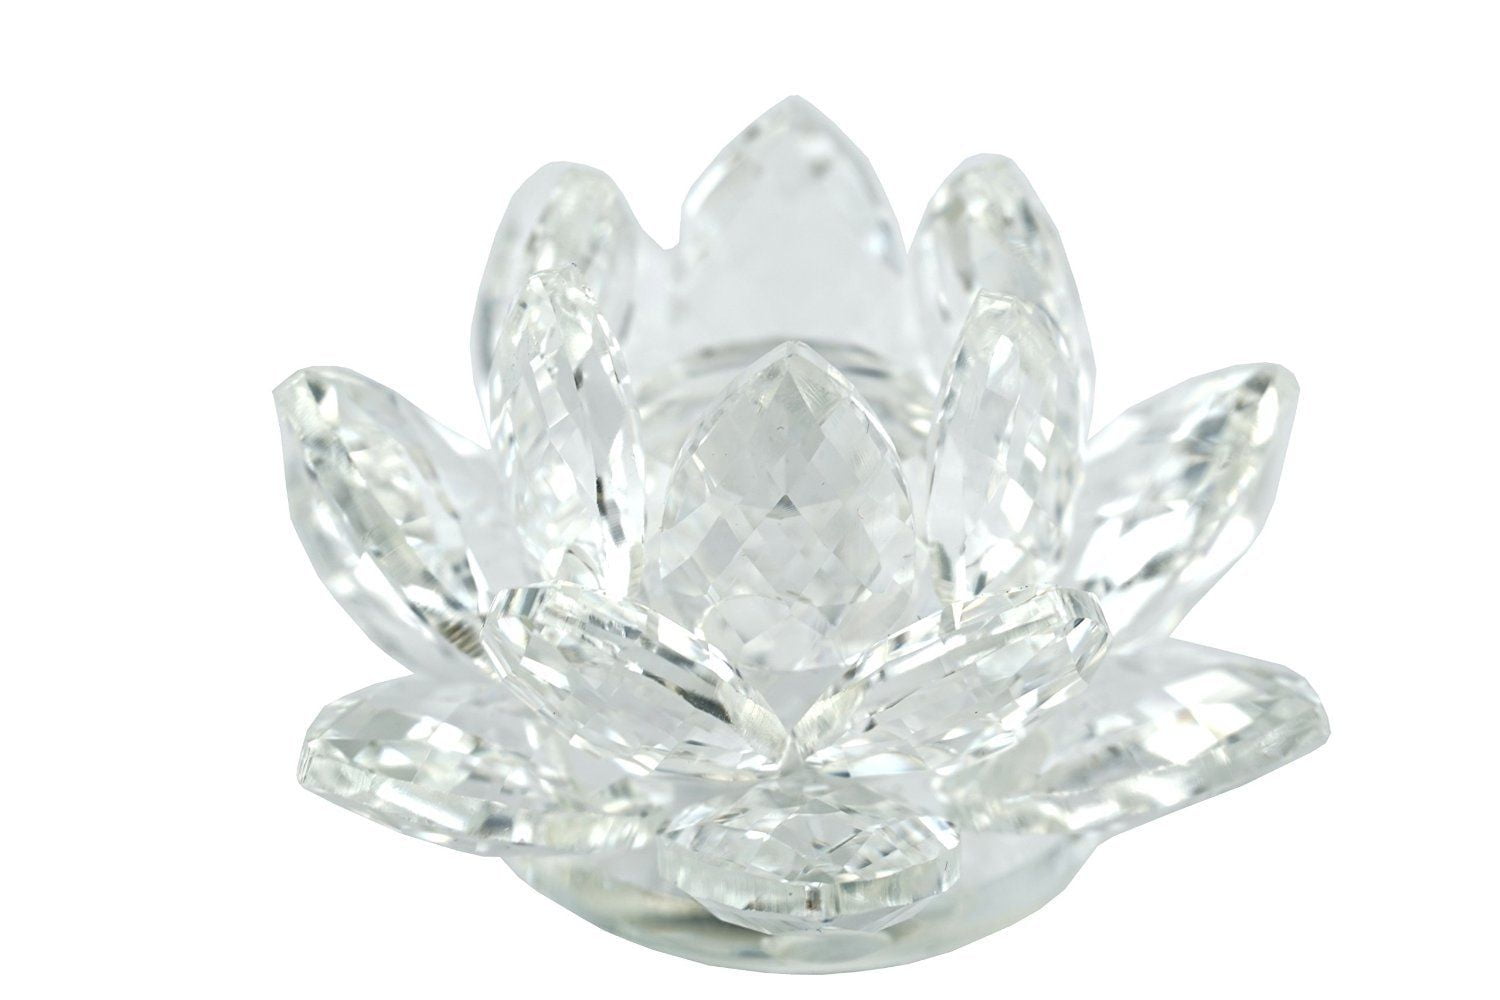 Stunning 3.5" Clear & Blue Hue Reflect Crystal Lotus Home Decor Gift USA Seller 